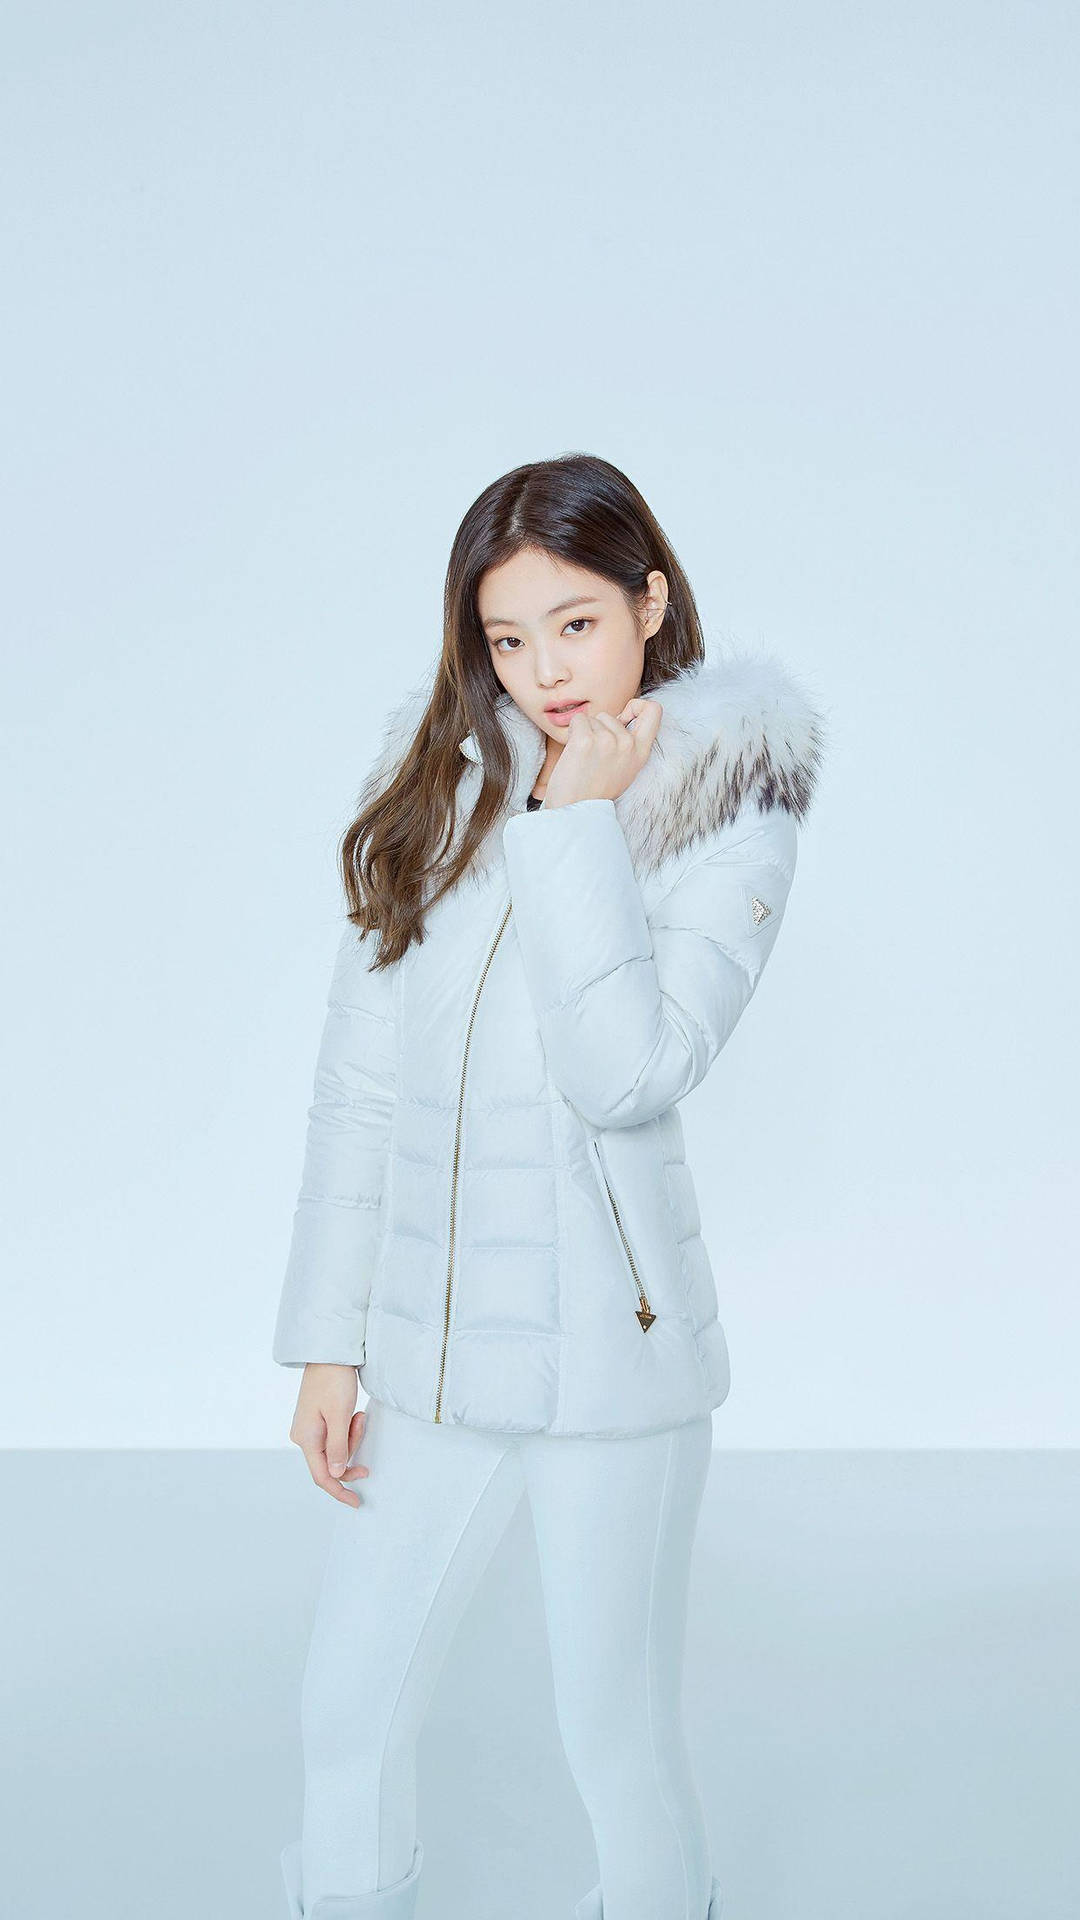 Jennie In White Winter Clothes